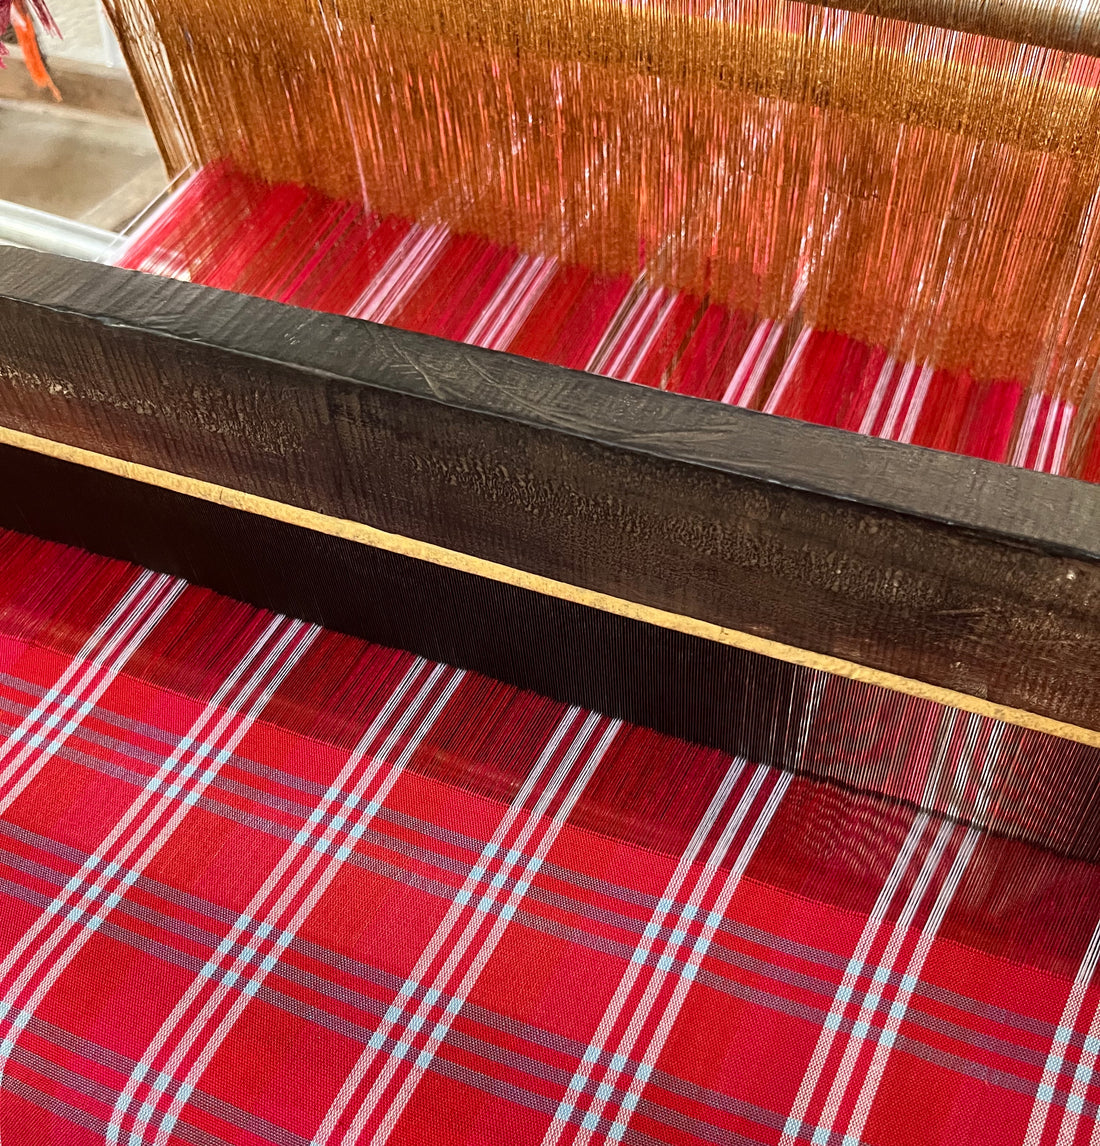 The Traditional Art of Handloom Weaving